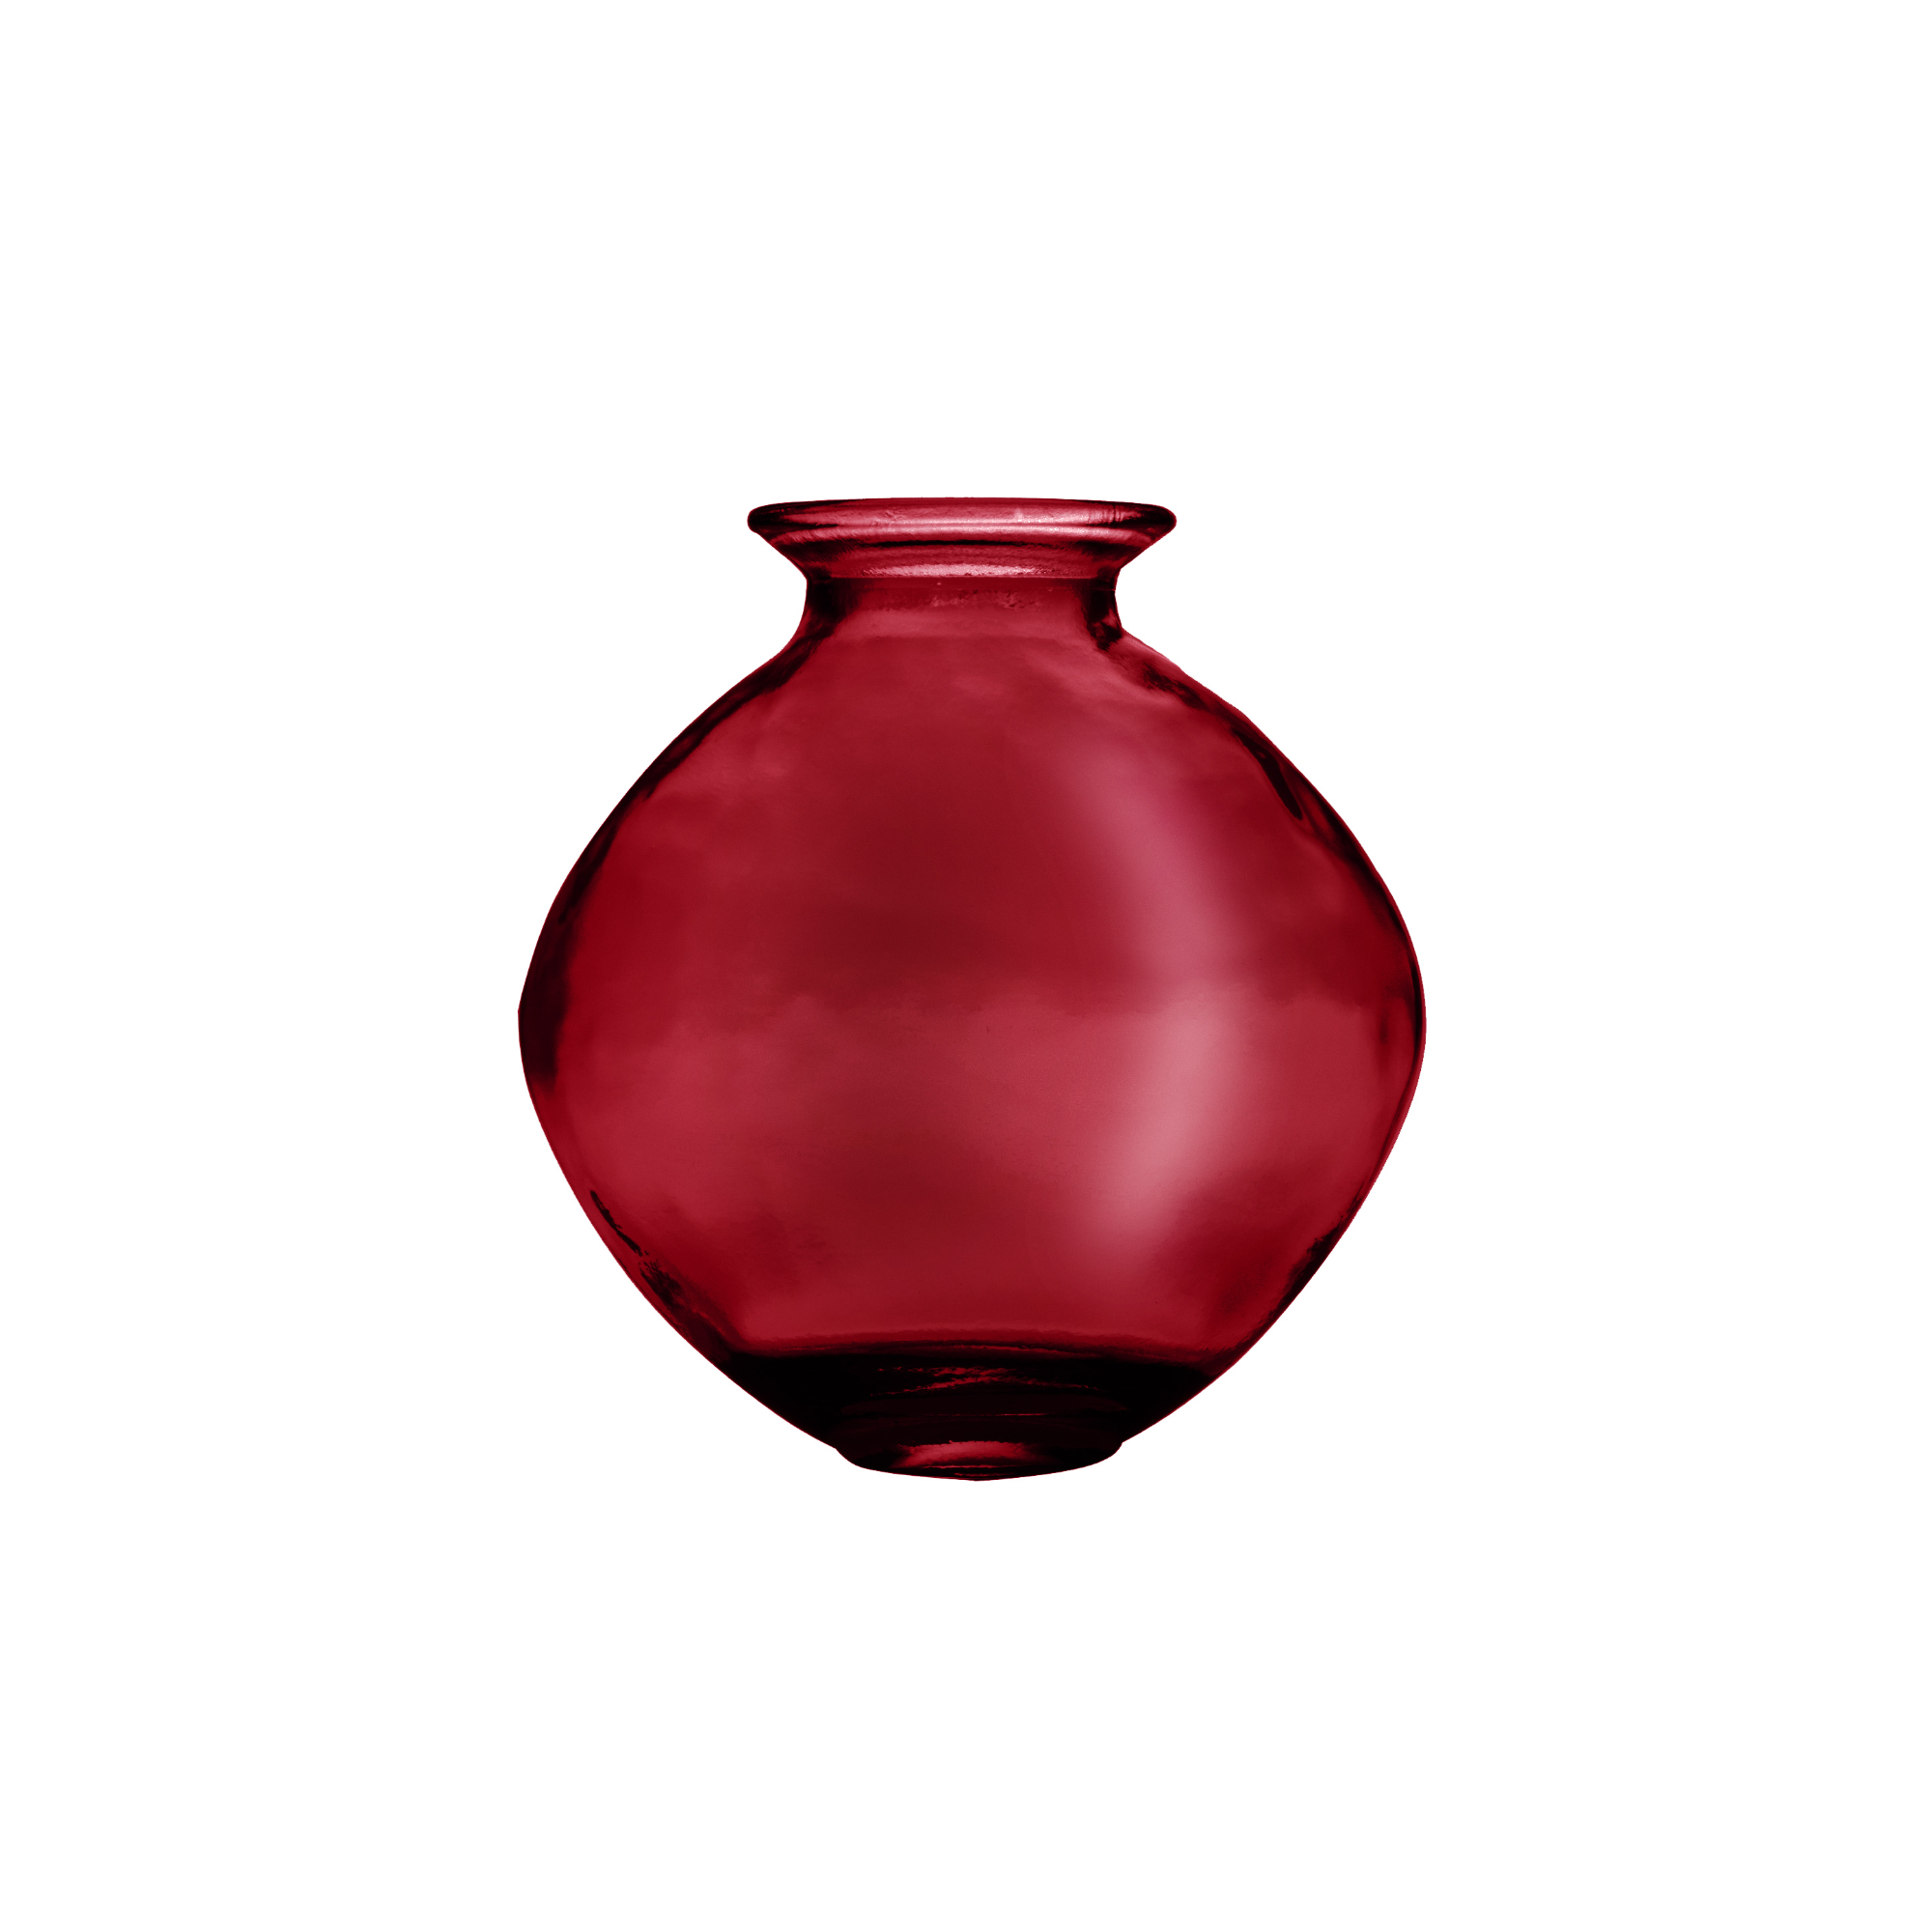 Ваза San miguel Neon рубиновый 26 см ваза san miguel antic коричневая 24 см